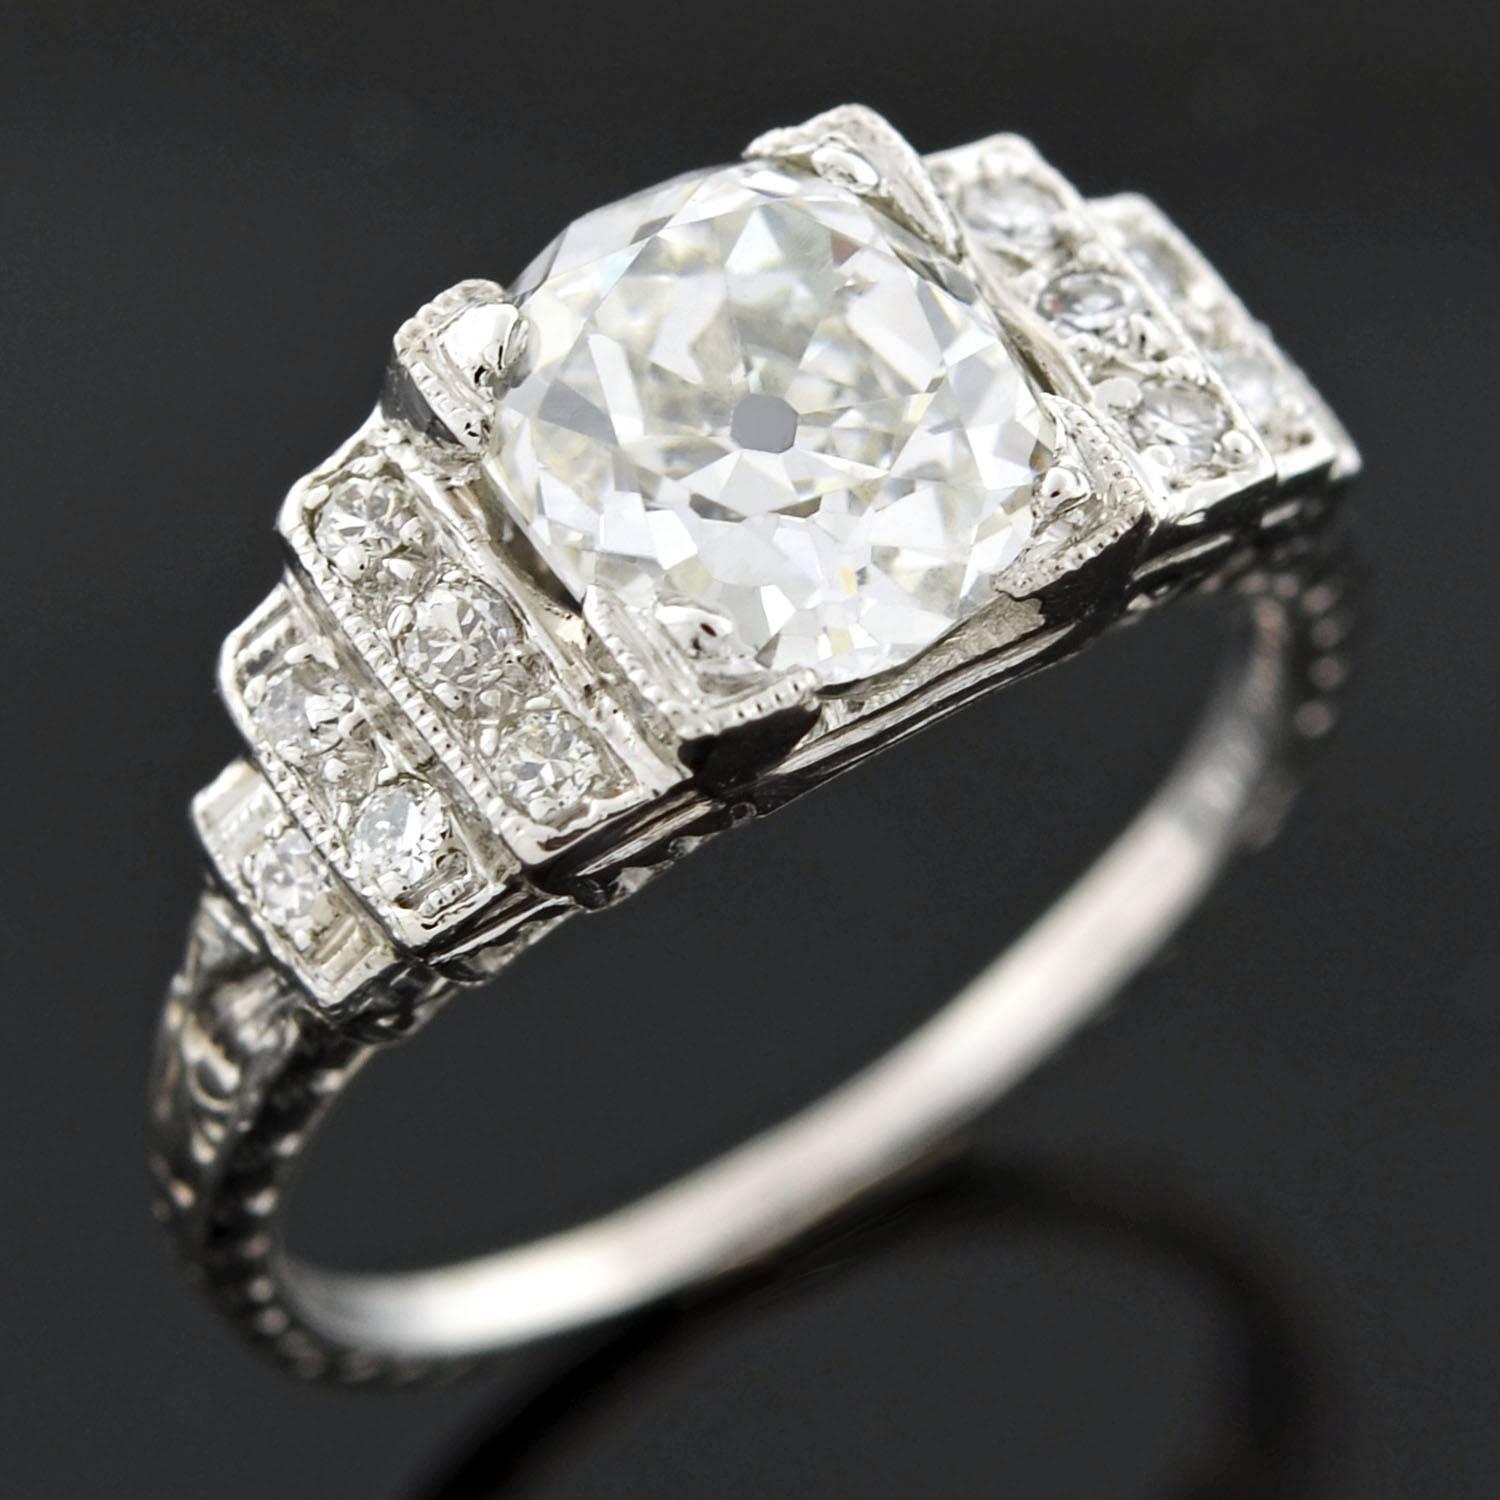 1.16 carat diamond ring